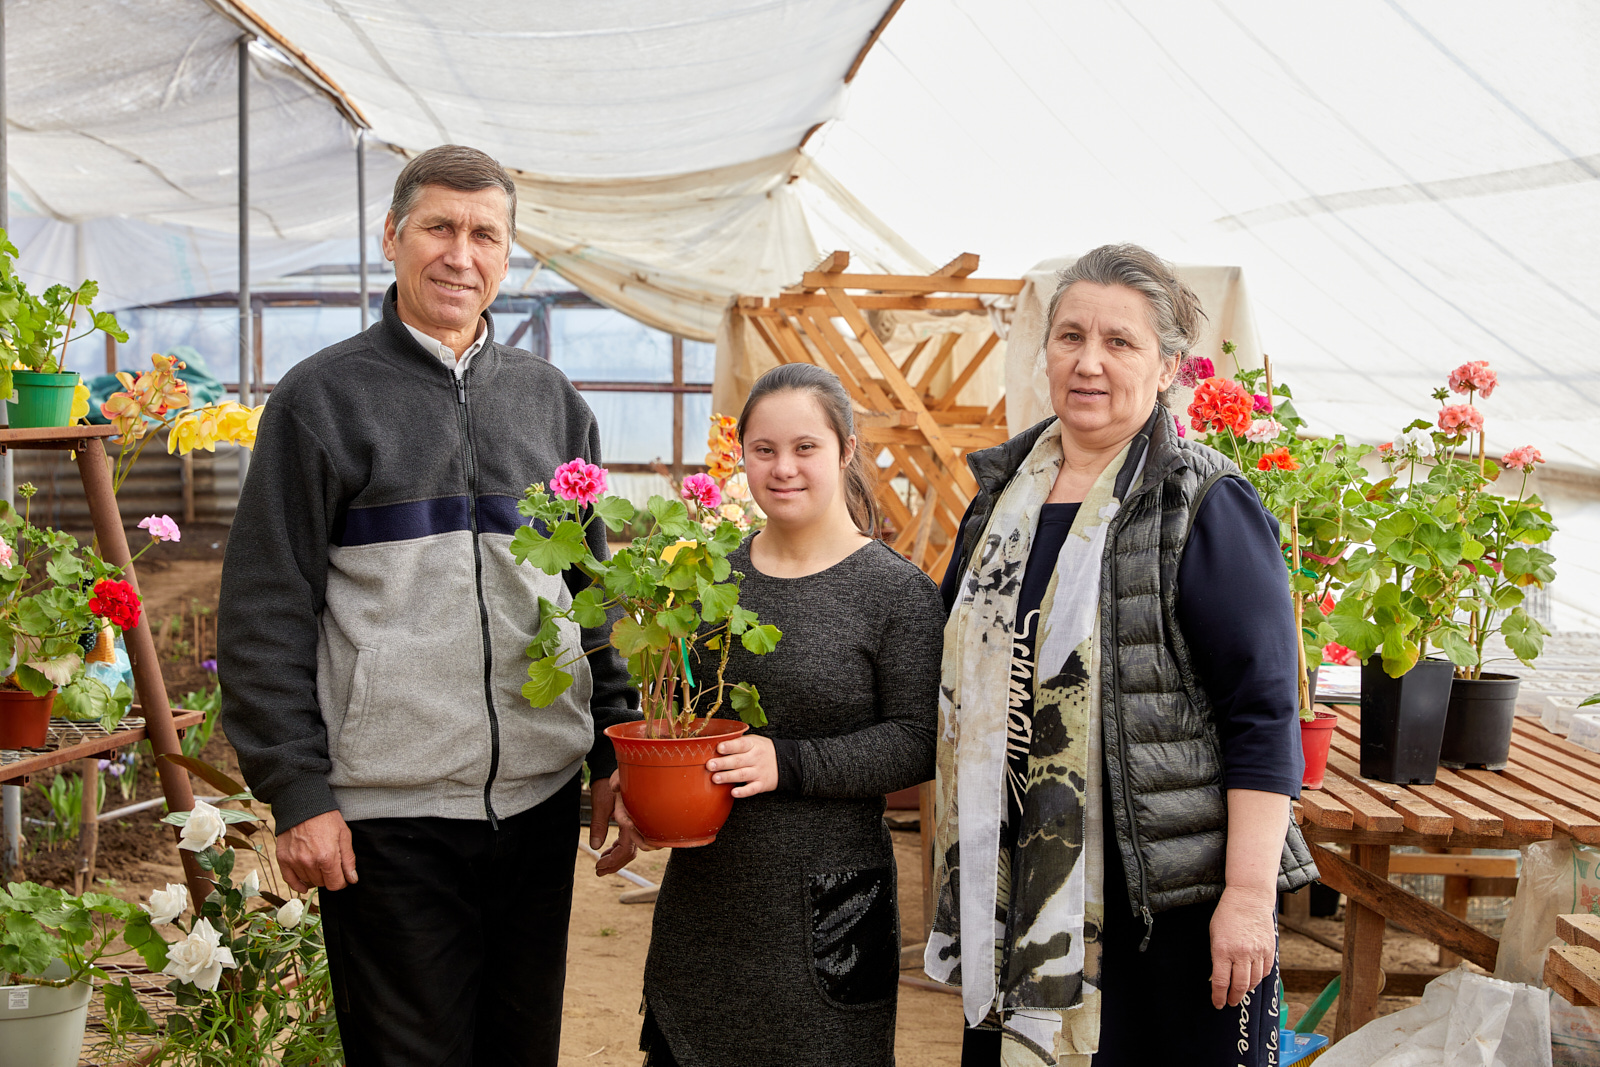 Daniela’s father built the greenhouse where she grows her flowers. Photo: UN Women/Aurel Obreja